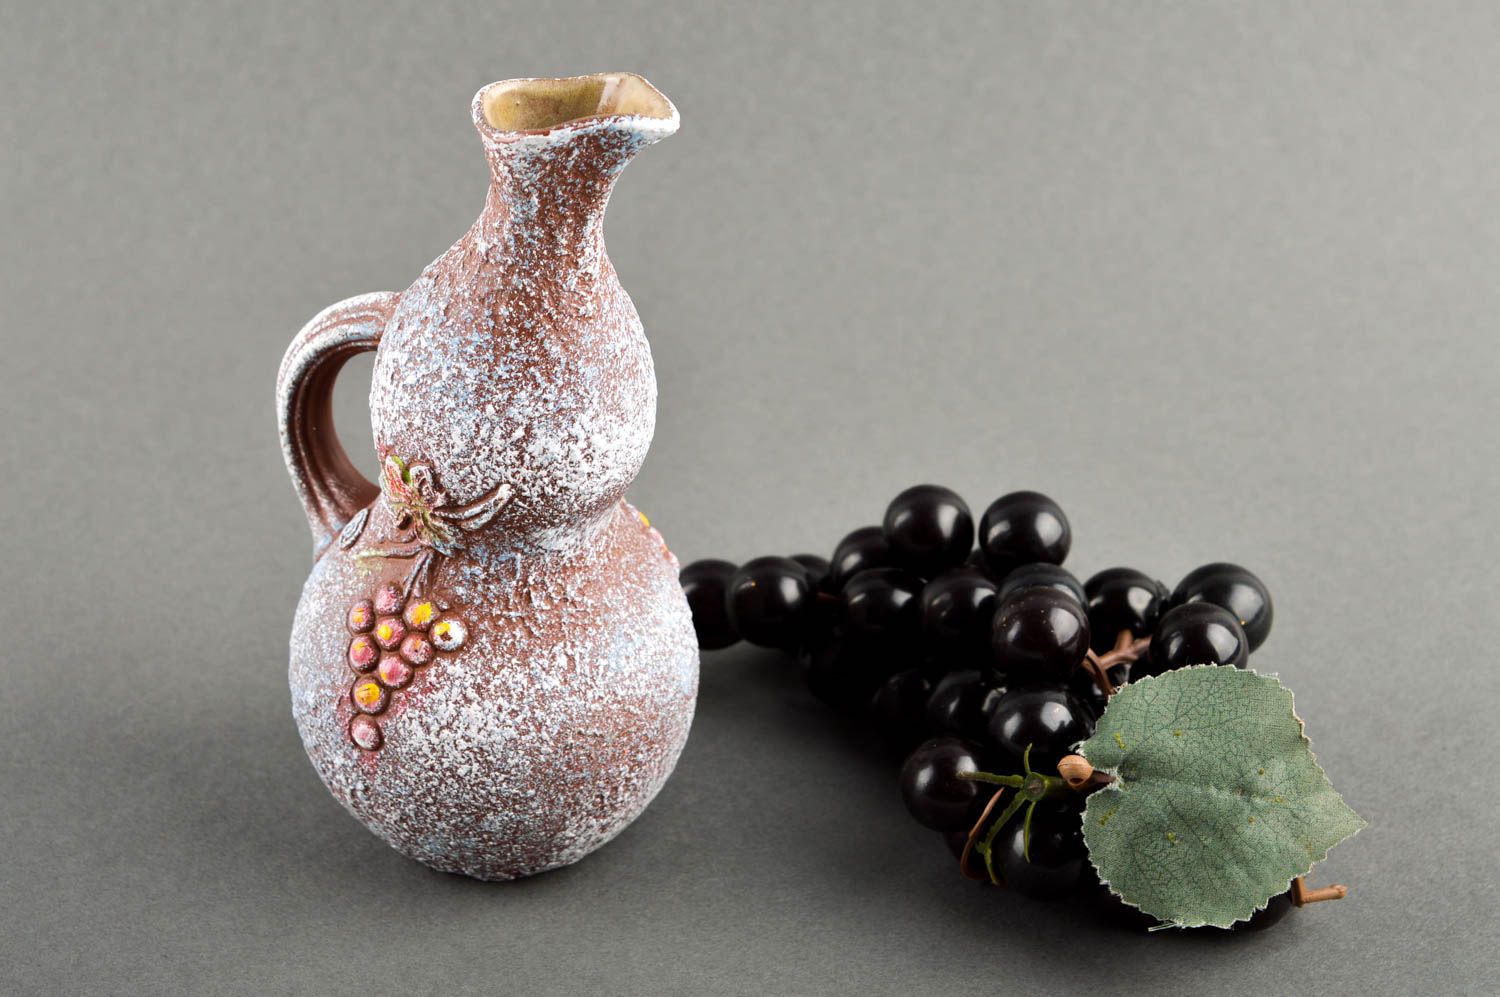 12 oz ceramic wine carafe in grape shape with handle 0,45 lb photo 1